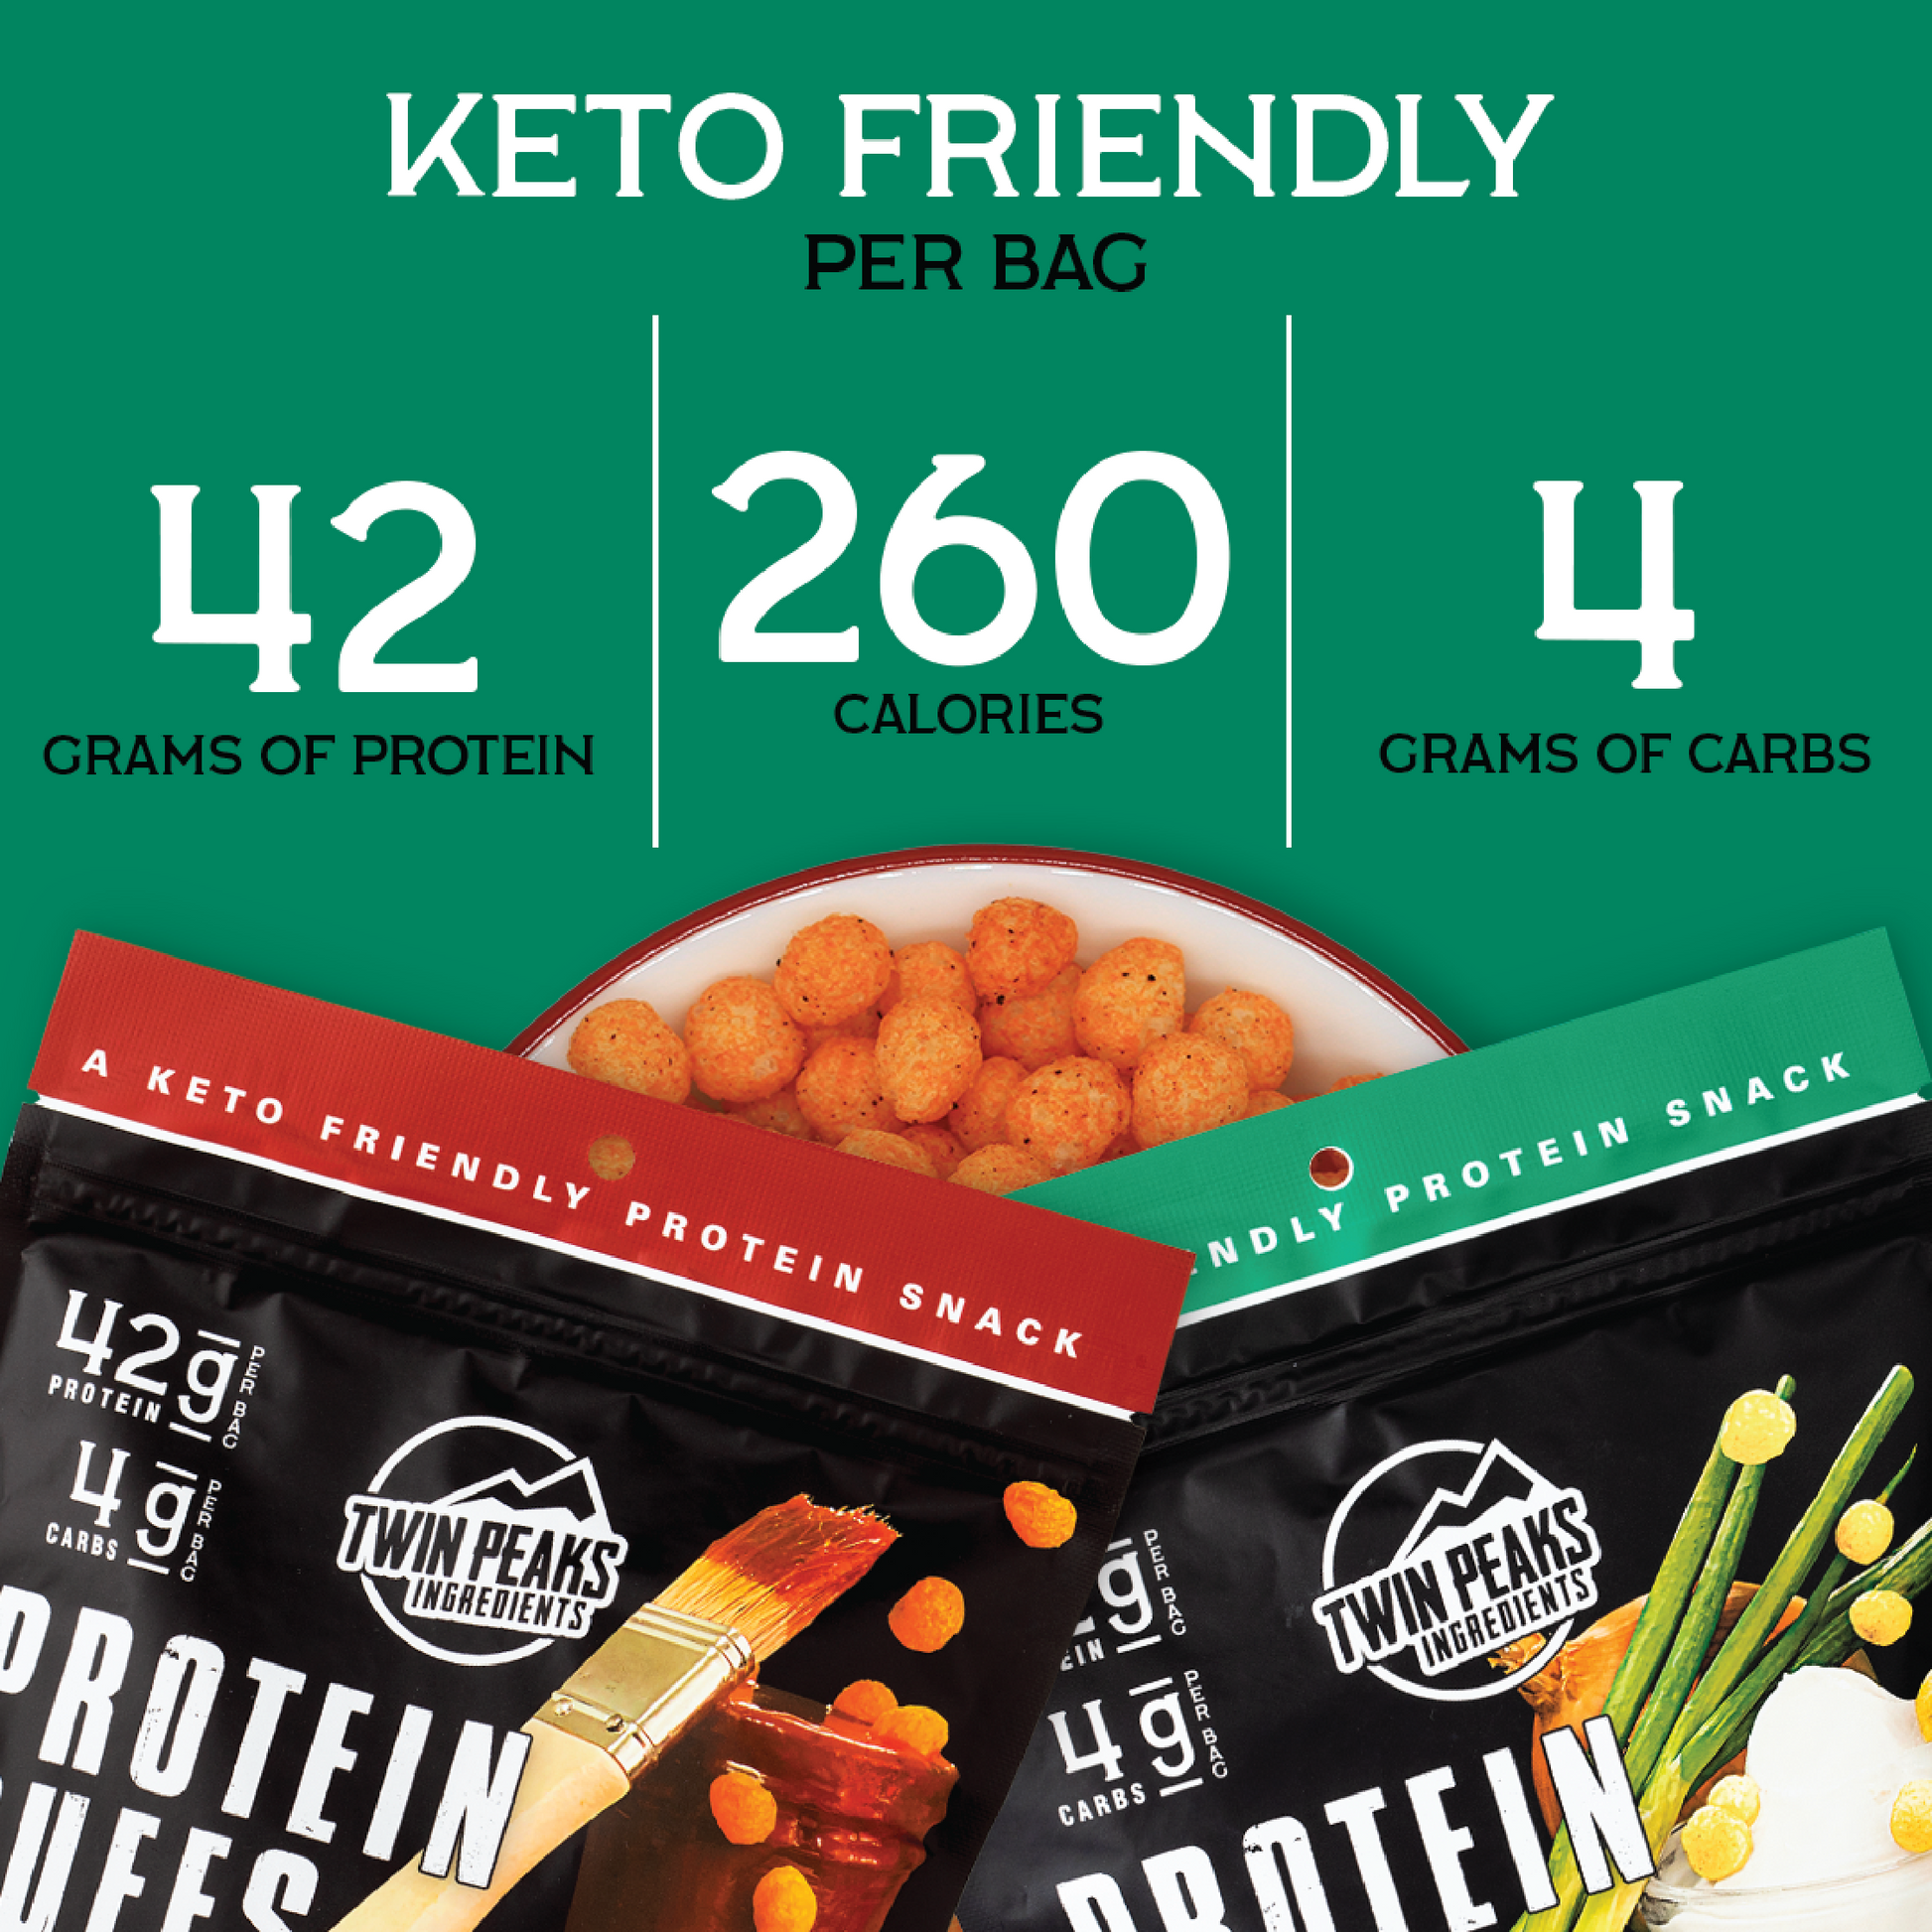 Macros - 42 grams protein, 260 calories, 4 grams carbs per bag